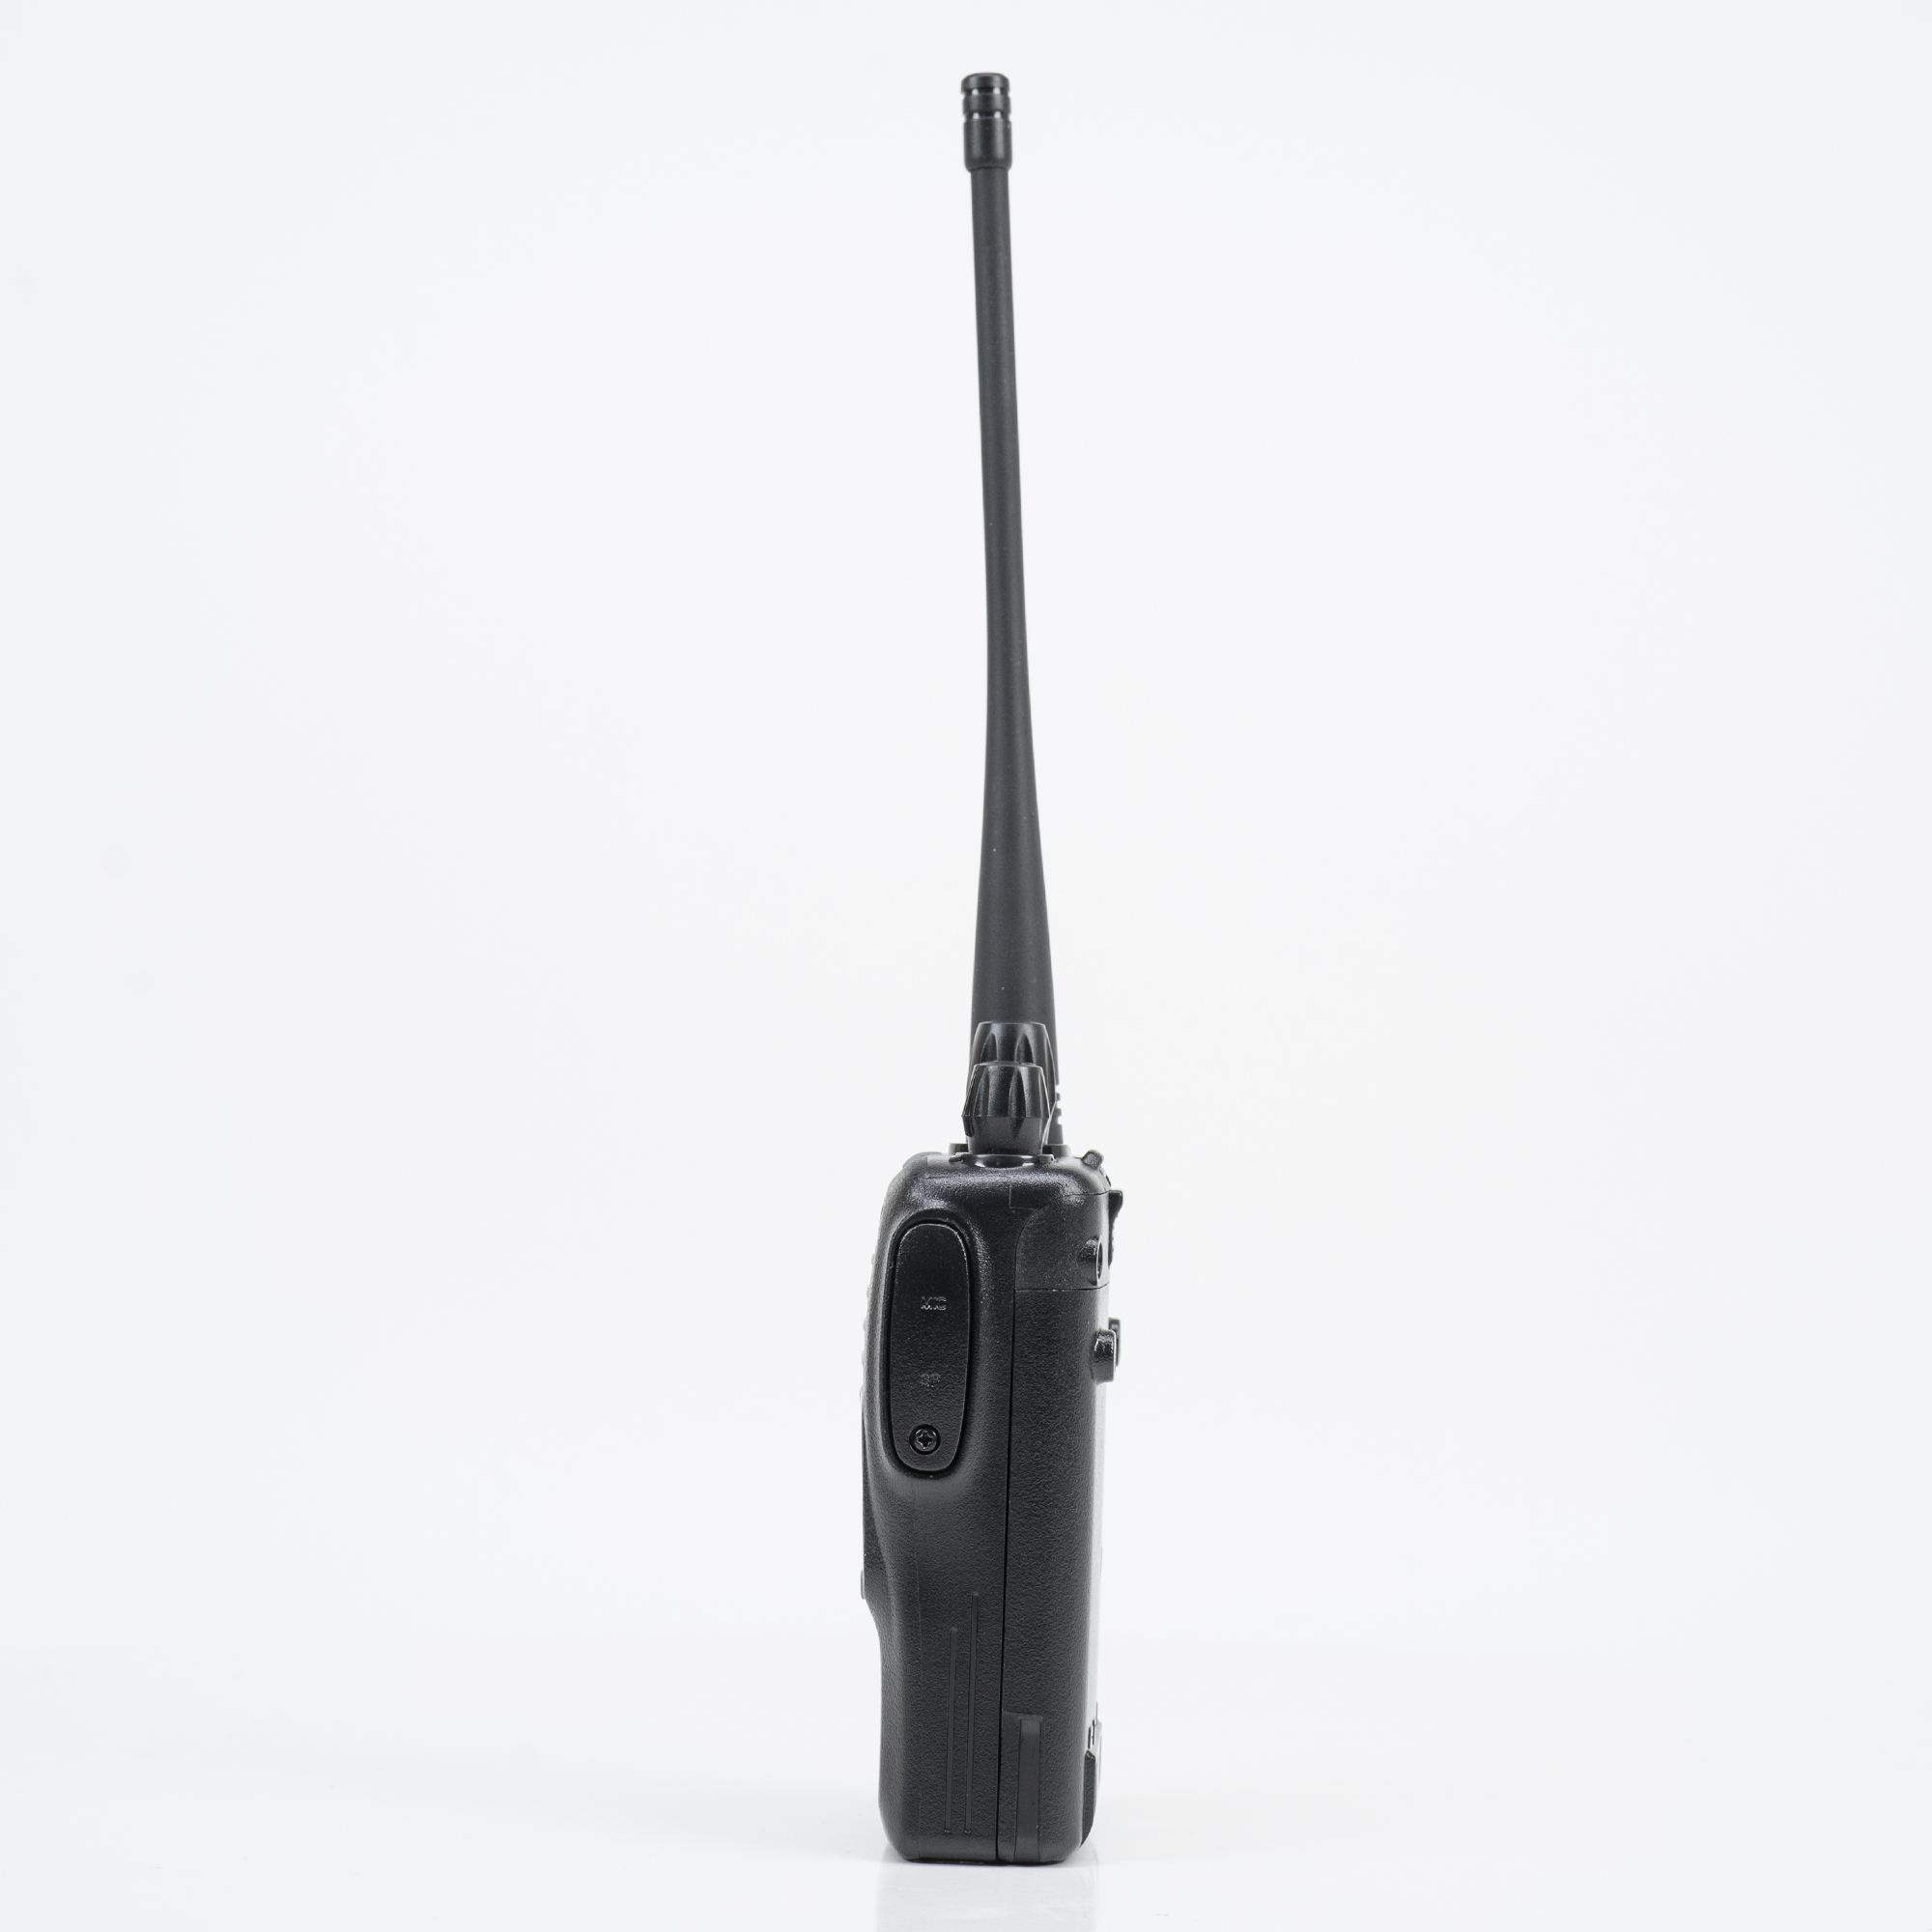 Statie radio PMR portabila CRT 8WP PMR UHF, waterproof IP67, Scan, Squelch, Vox, Radio FM image2